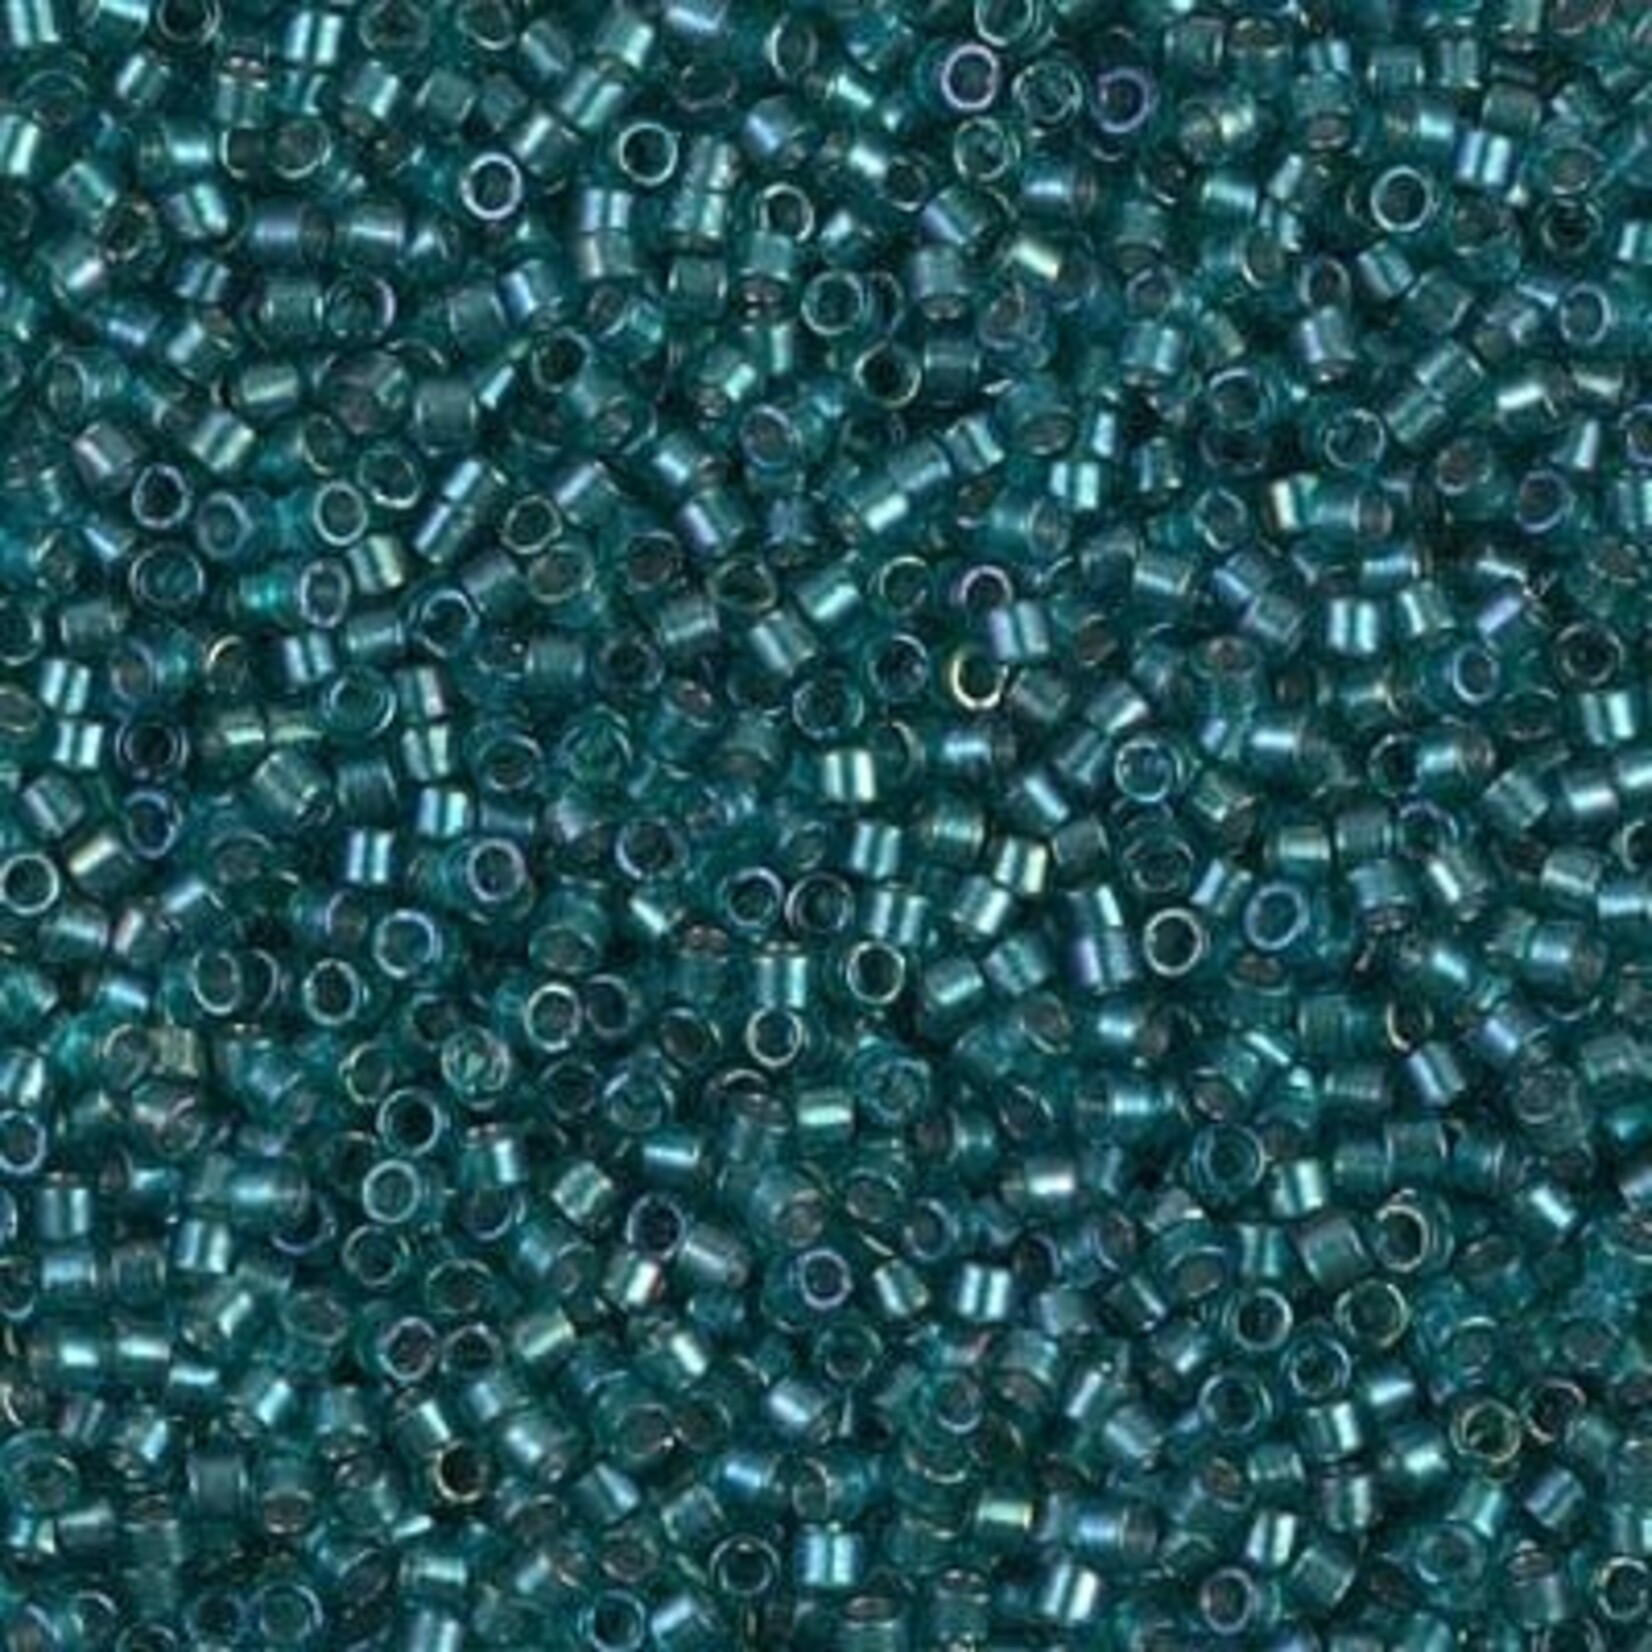 Miyuki Delica 11/0 Sparkle Aqua Teal Inside Lined Color Seed Beads